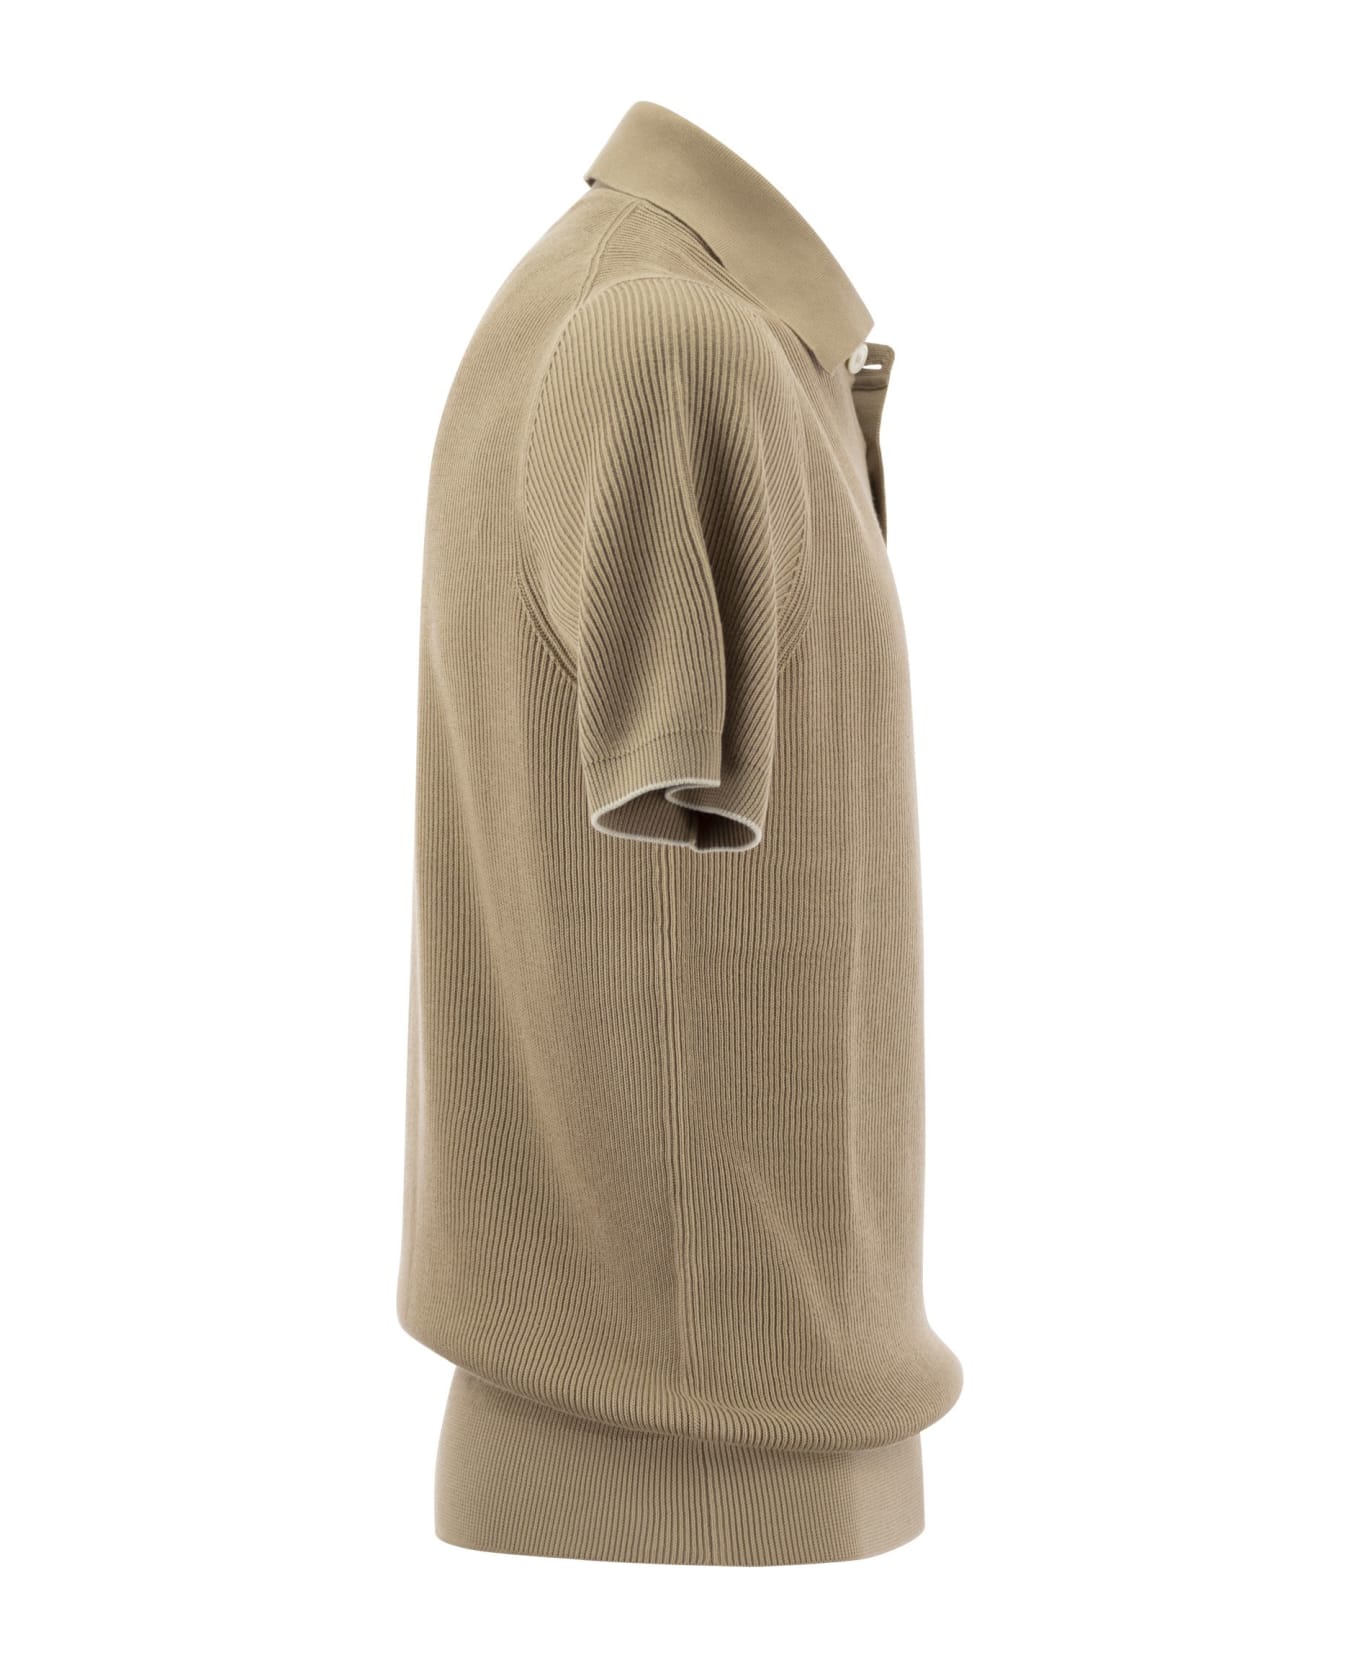 Brunello Cucinelli Cotton Polo-style Jersey - Sand ポロシャツ